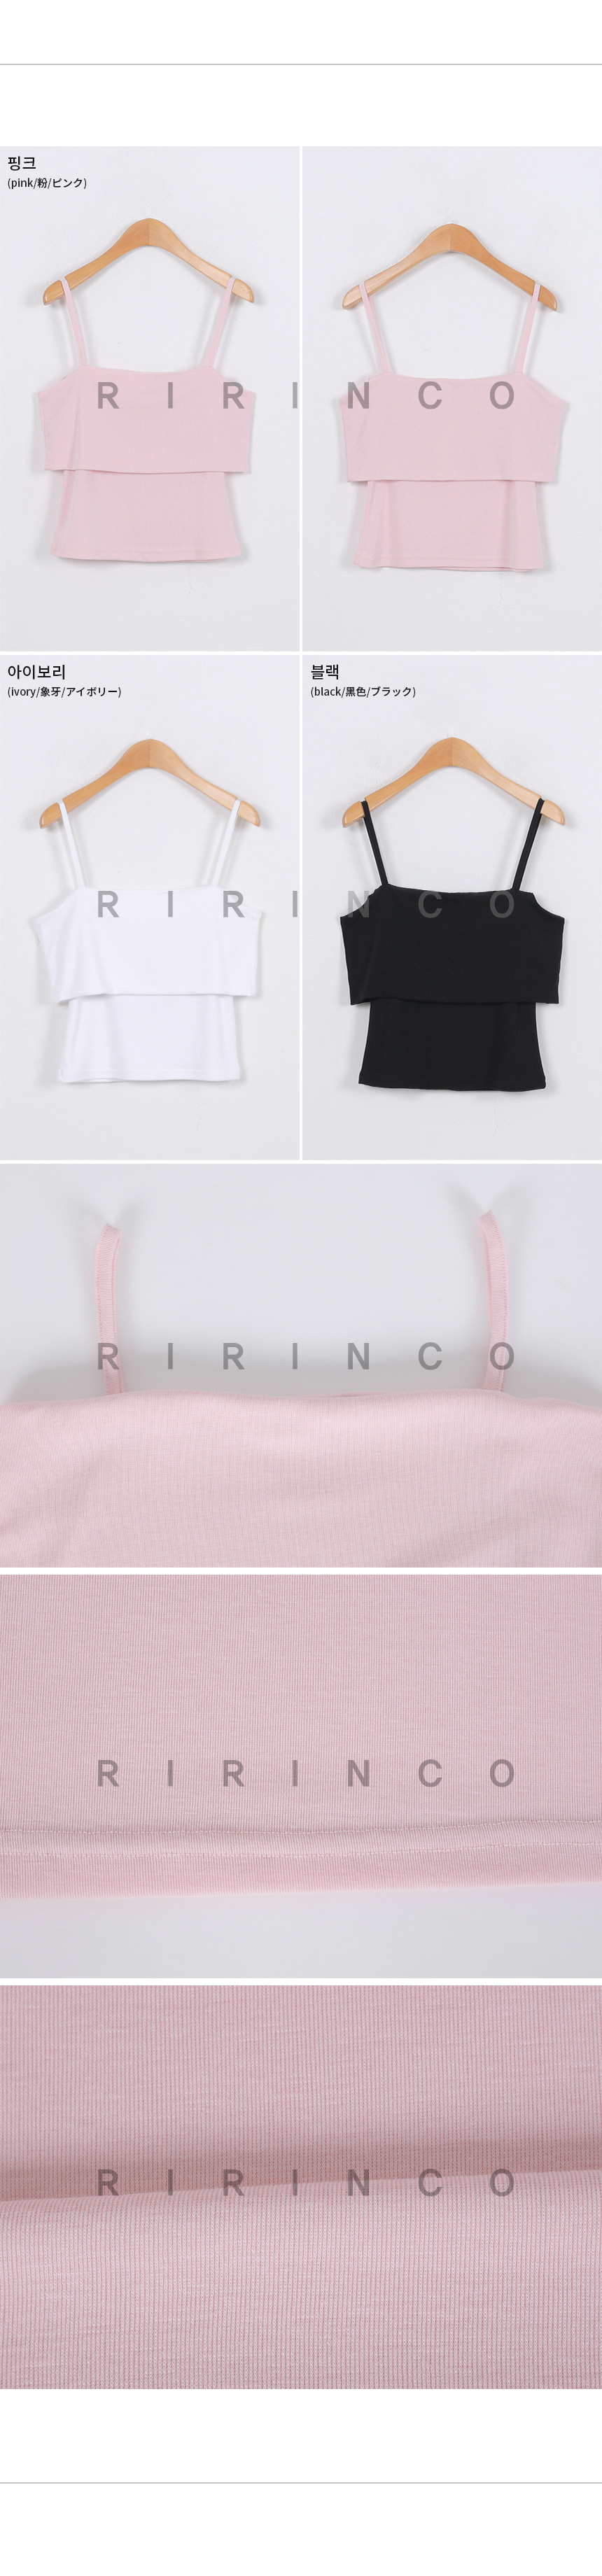 RIRINCO オフショルダーストラップ半袖Tシャツ